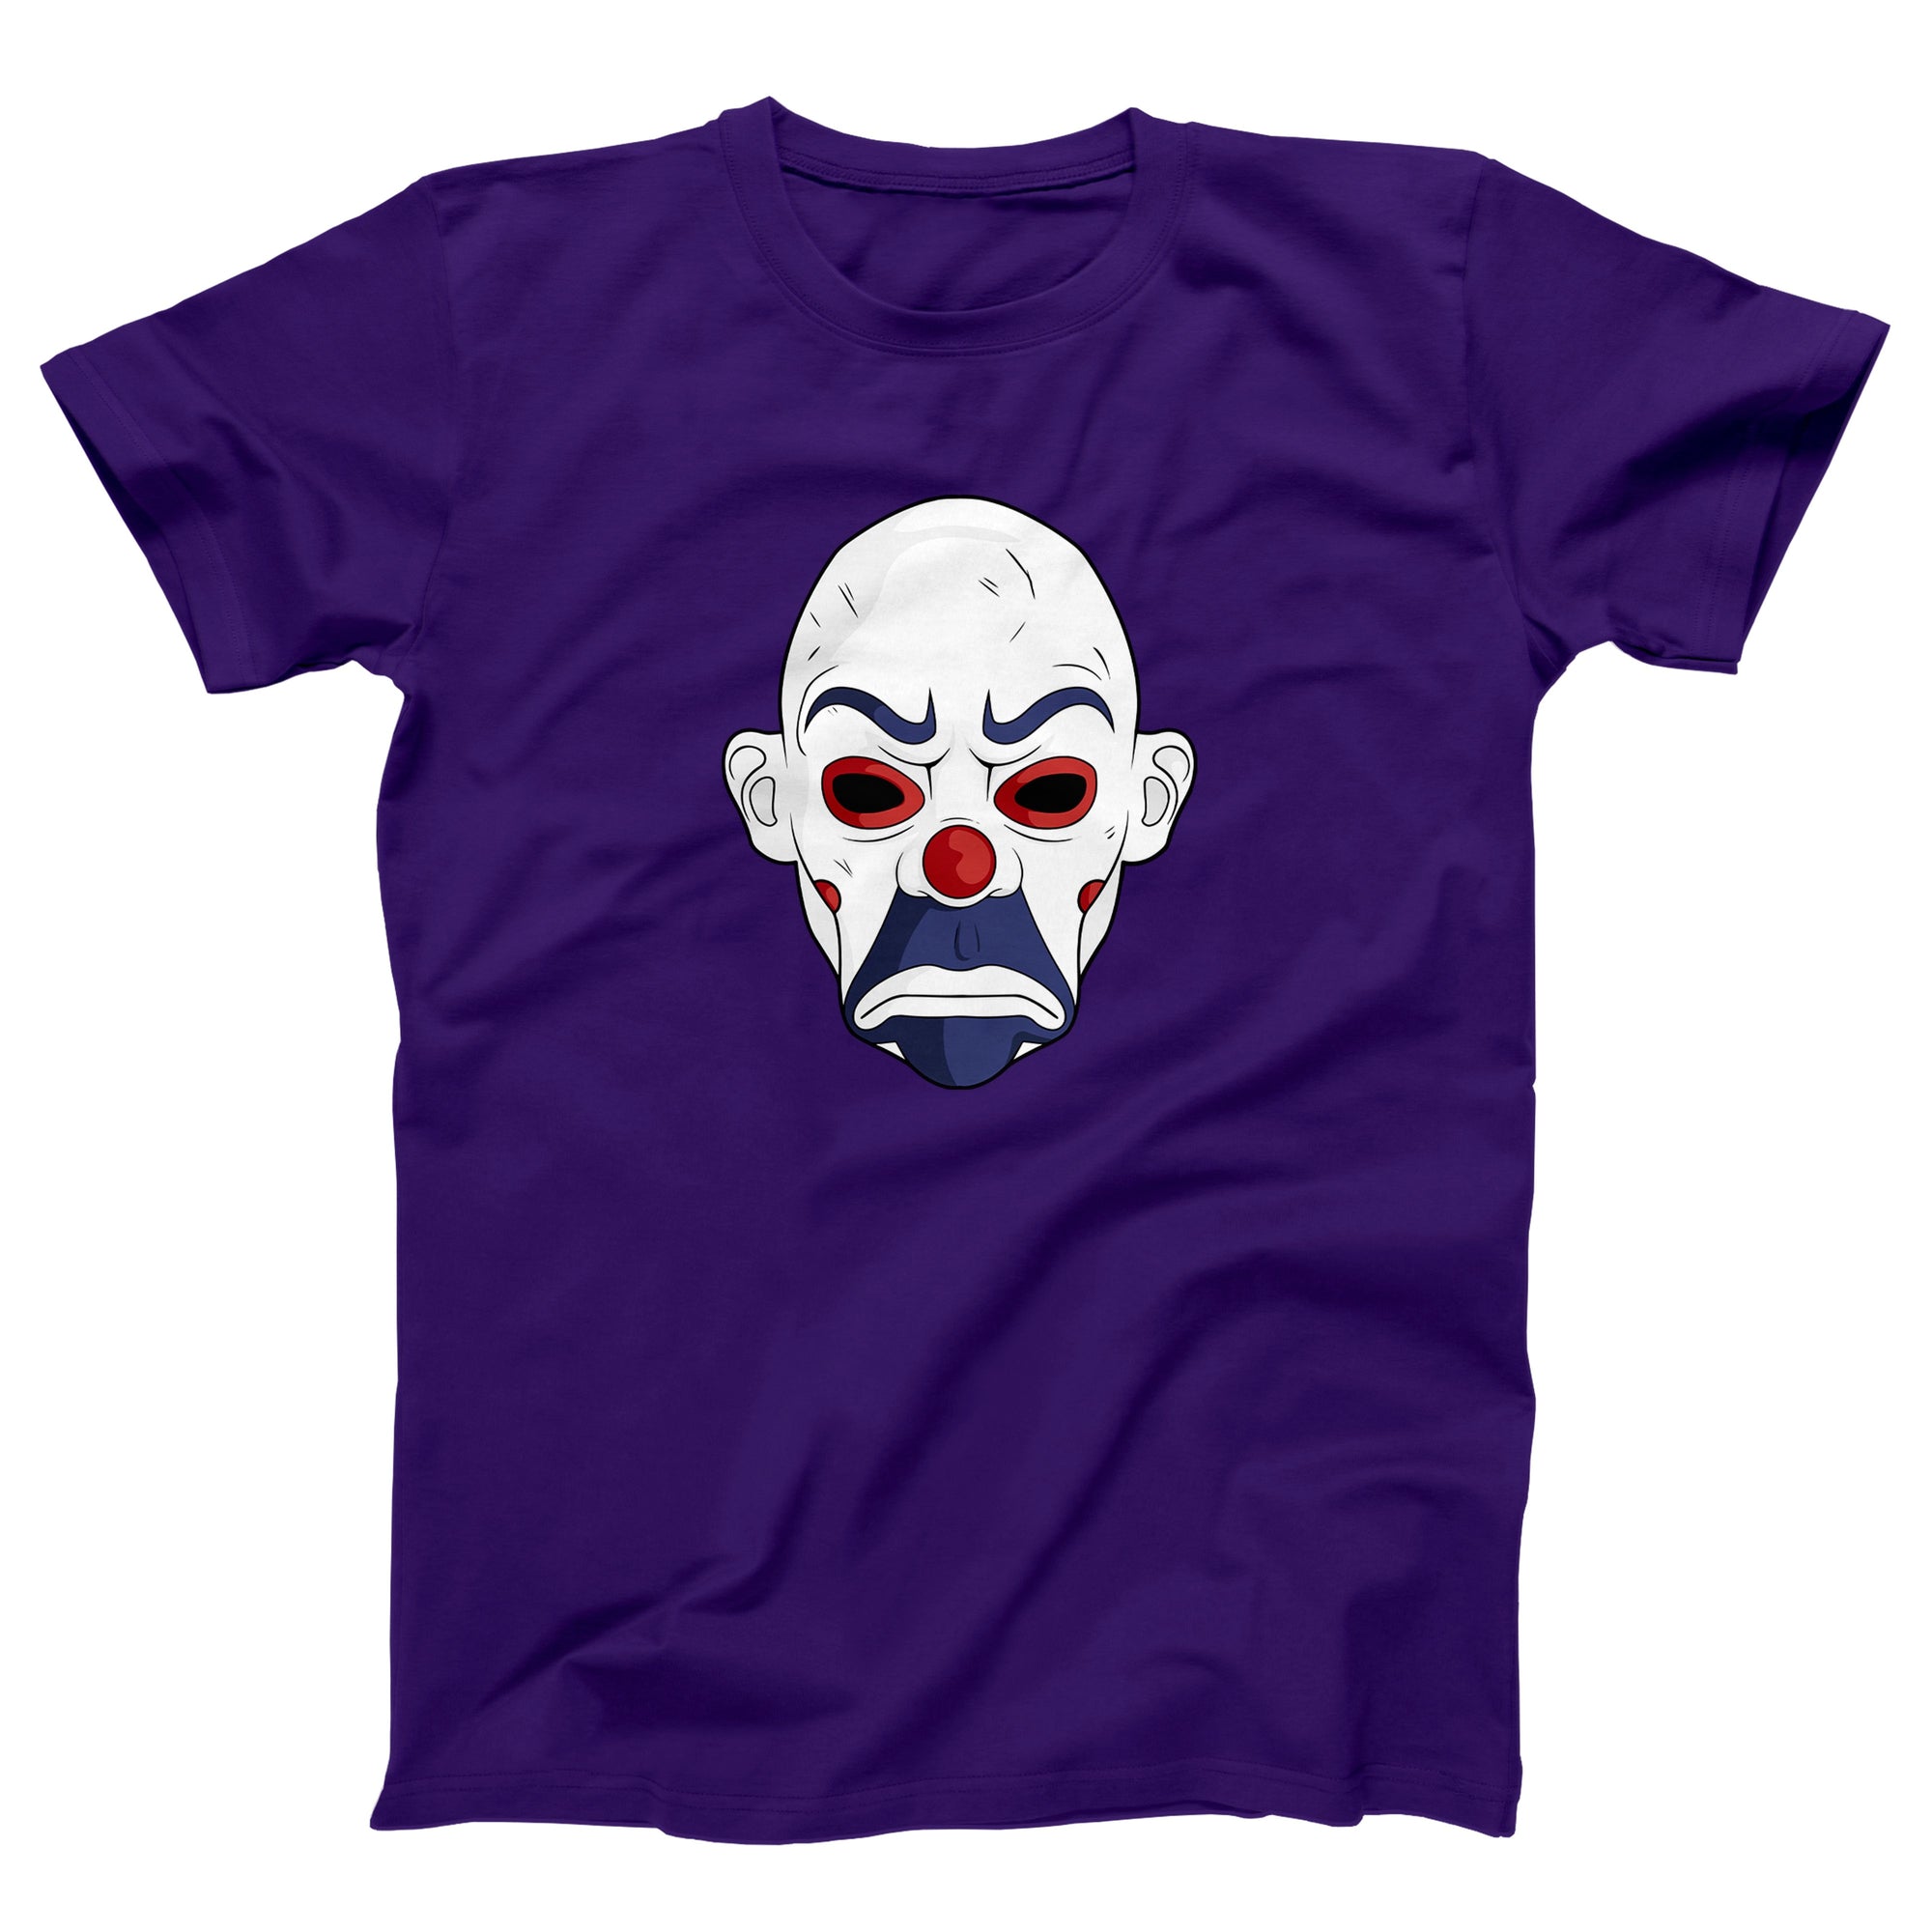 Clown Mask Adult Unisex T-Shirt - anishphilip